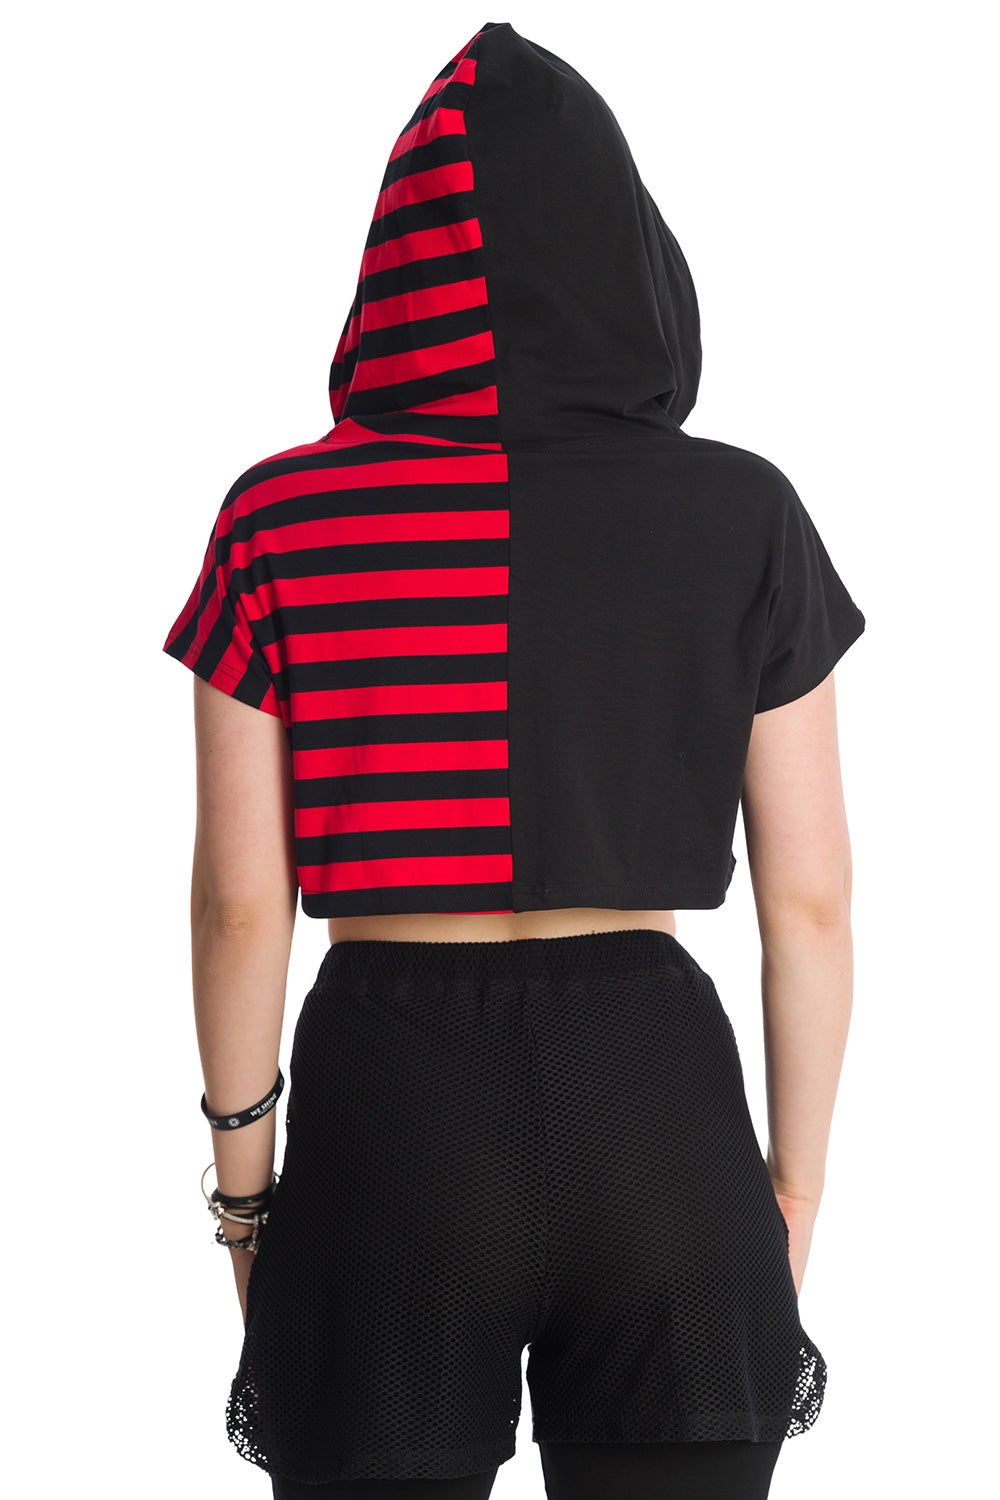 Alternative model in cropped half red strip and half black hoodie with hood up.